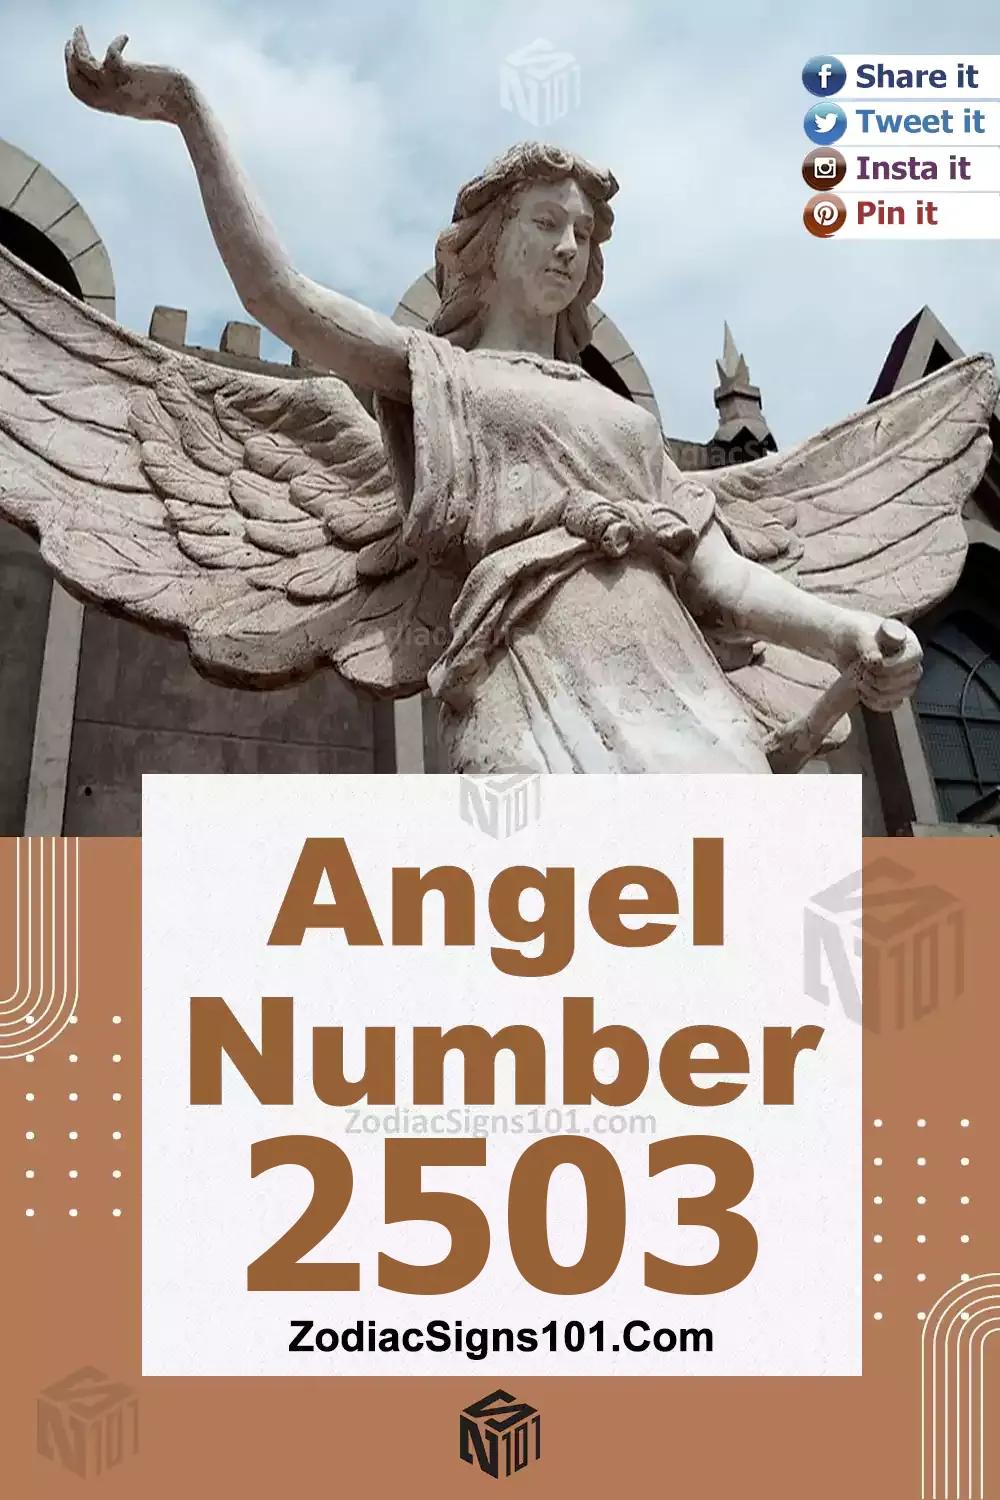 2503-Angel-Number-Meaning.jpg